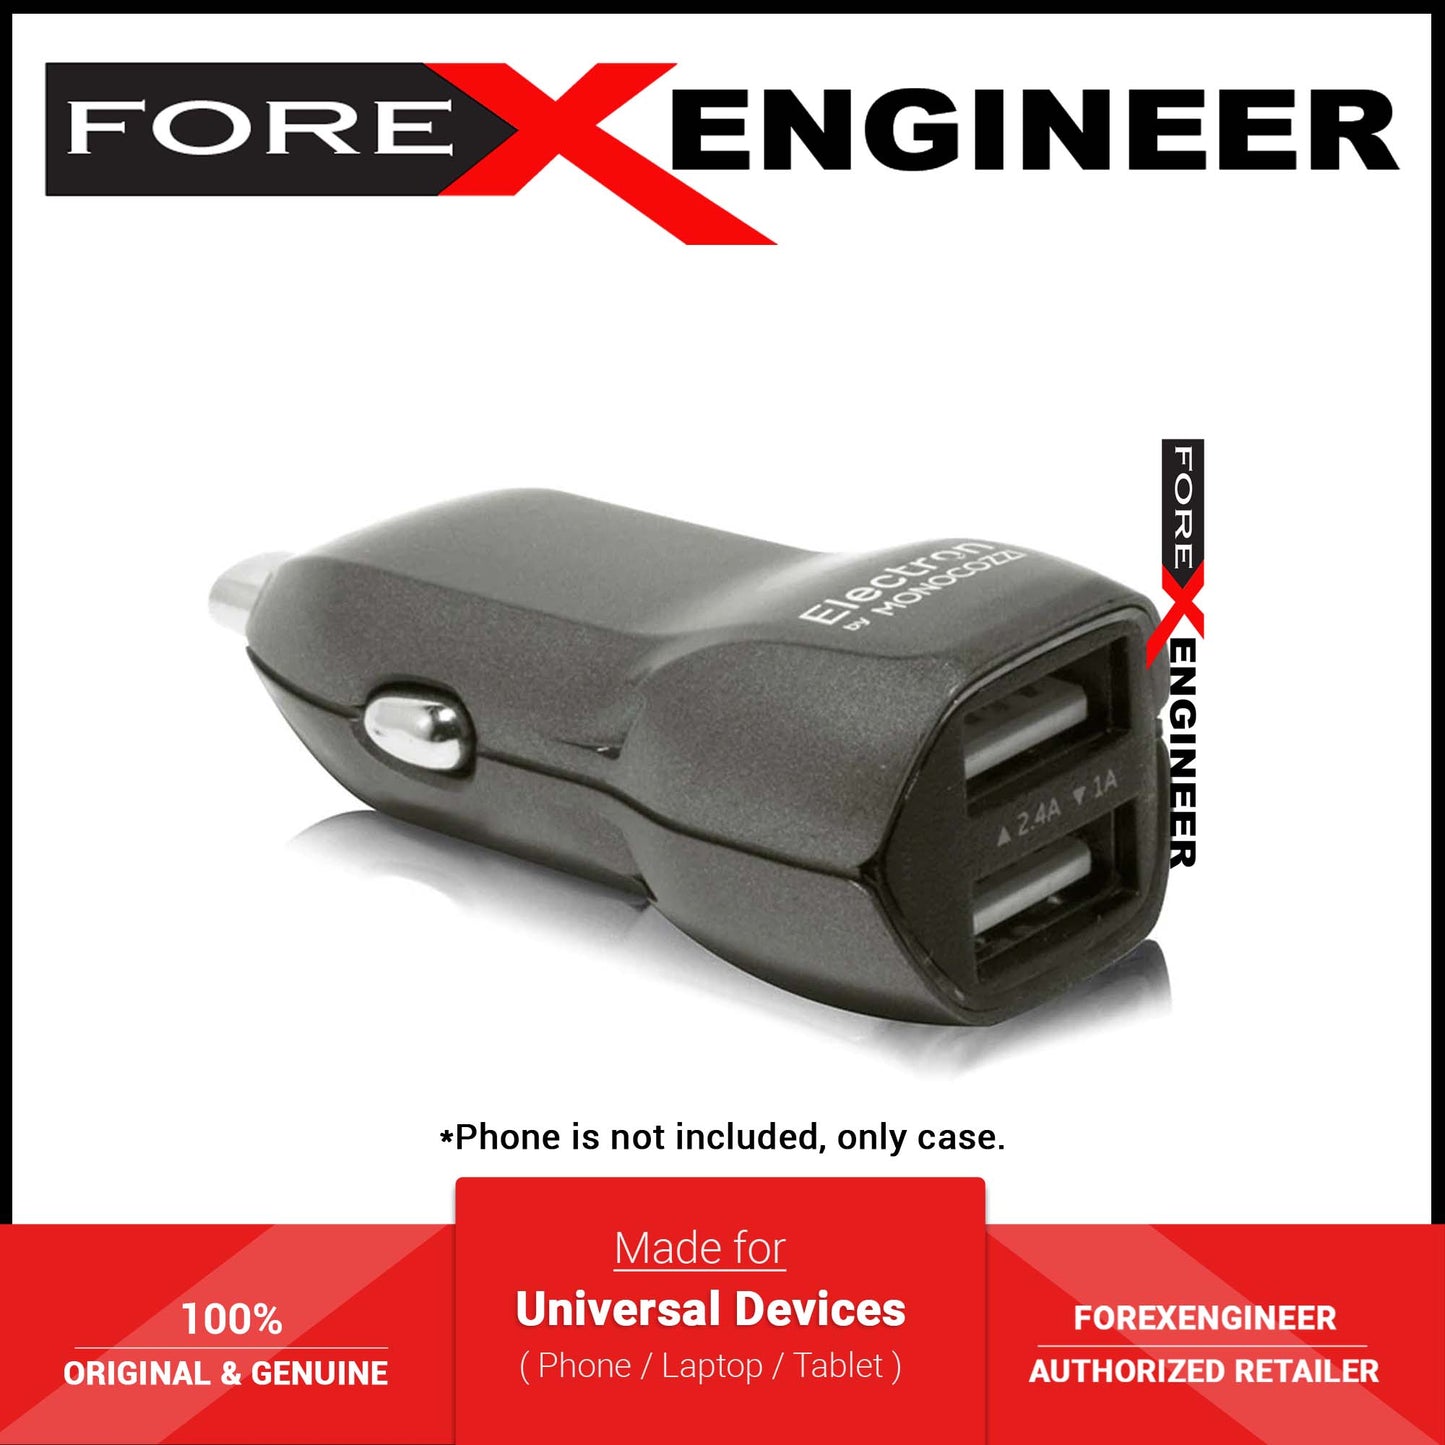 Monocozzi Automotive ORE 3.4A Dual USB Car Charger - Charcoal (Barcode: 4897021599950 )